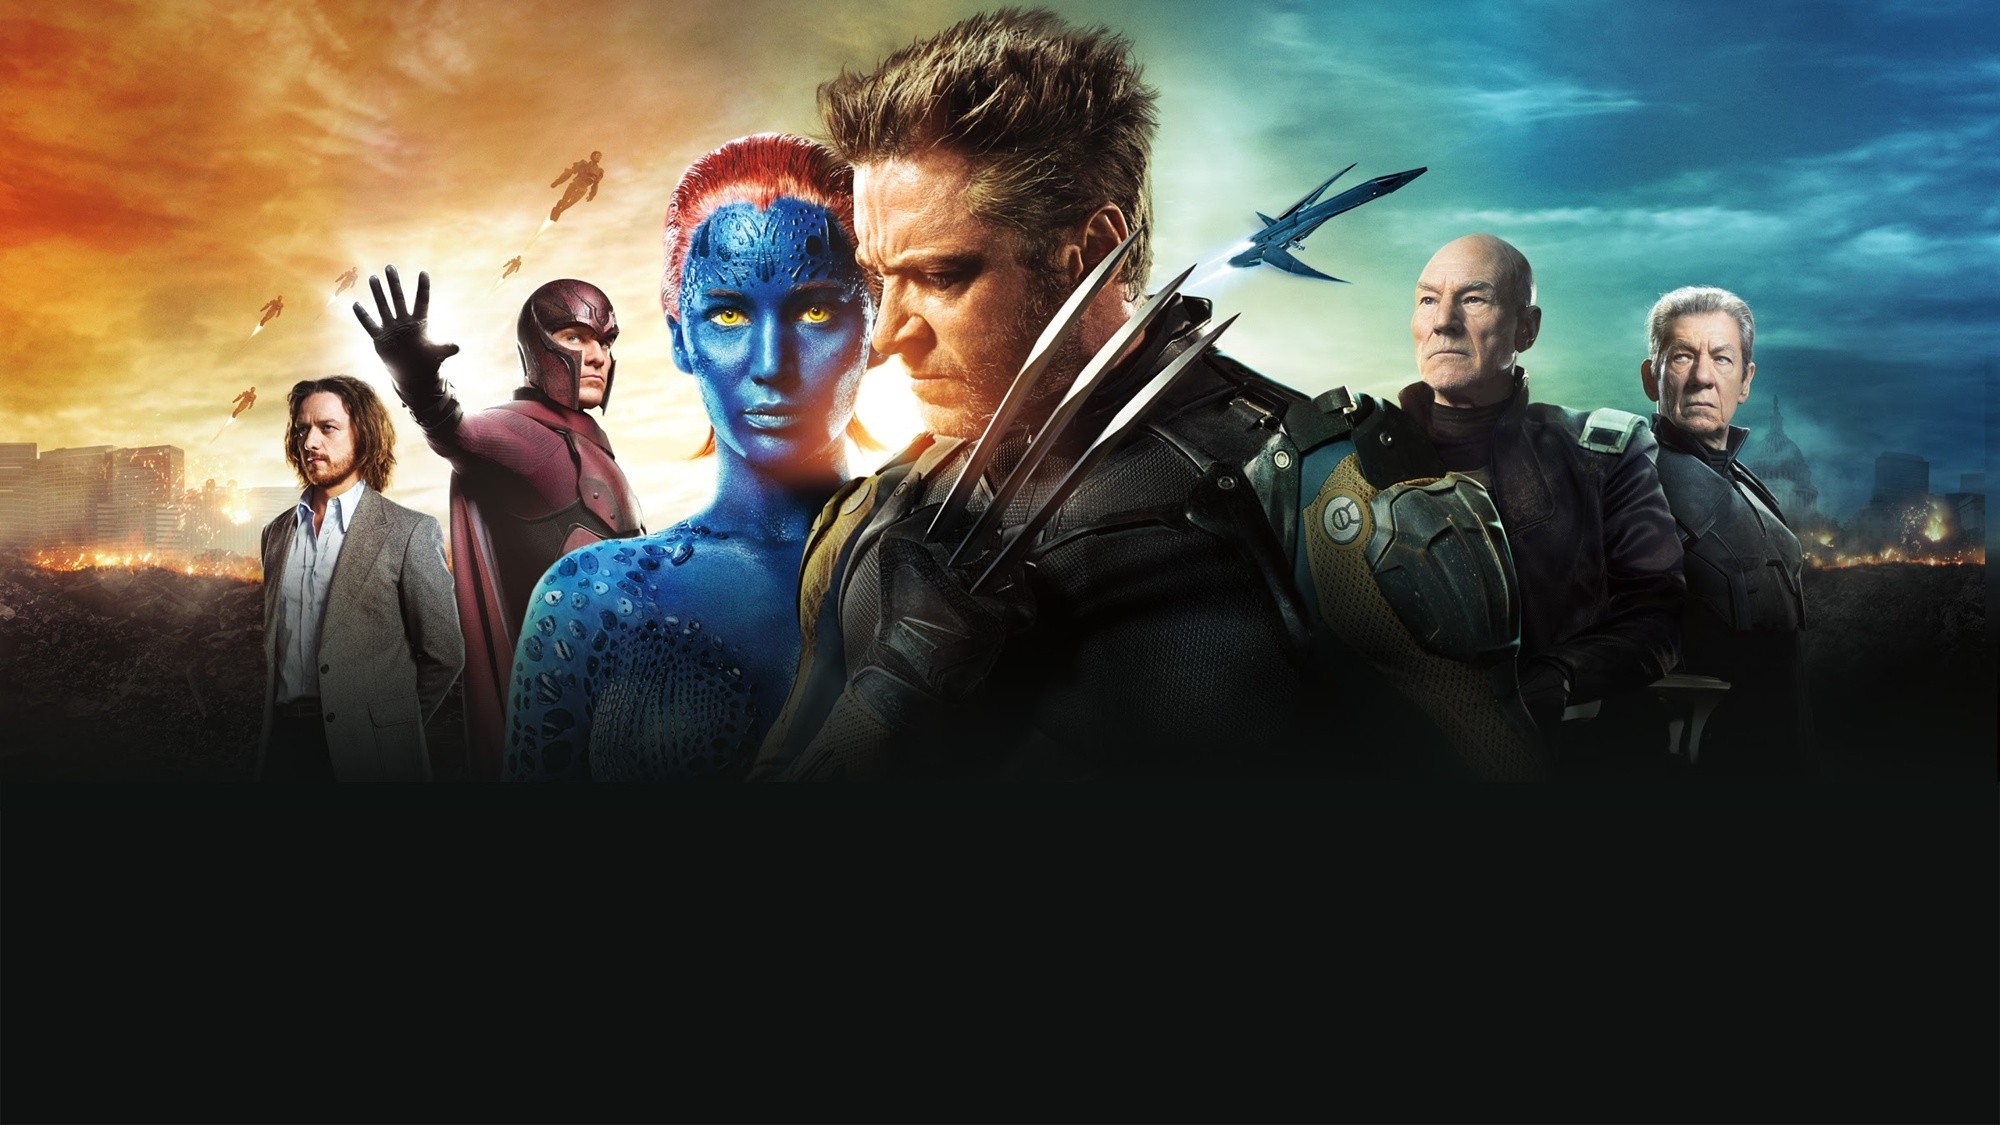 James McAvoy, Michael Fassbender, Jennifer Lawrence, Hugh Jackman, Patrick Stewart and Ian McKellen in 20th Century Fox's X-Men: Days of Future Past (2014)